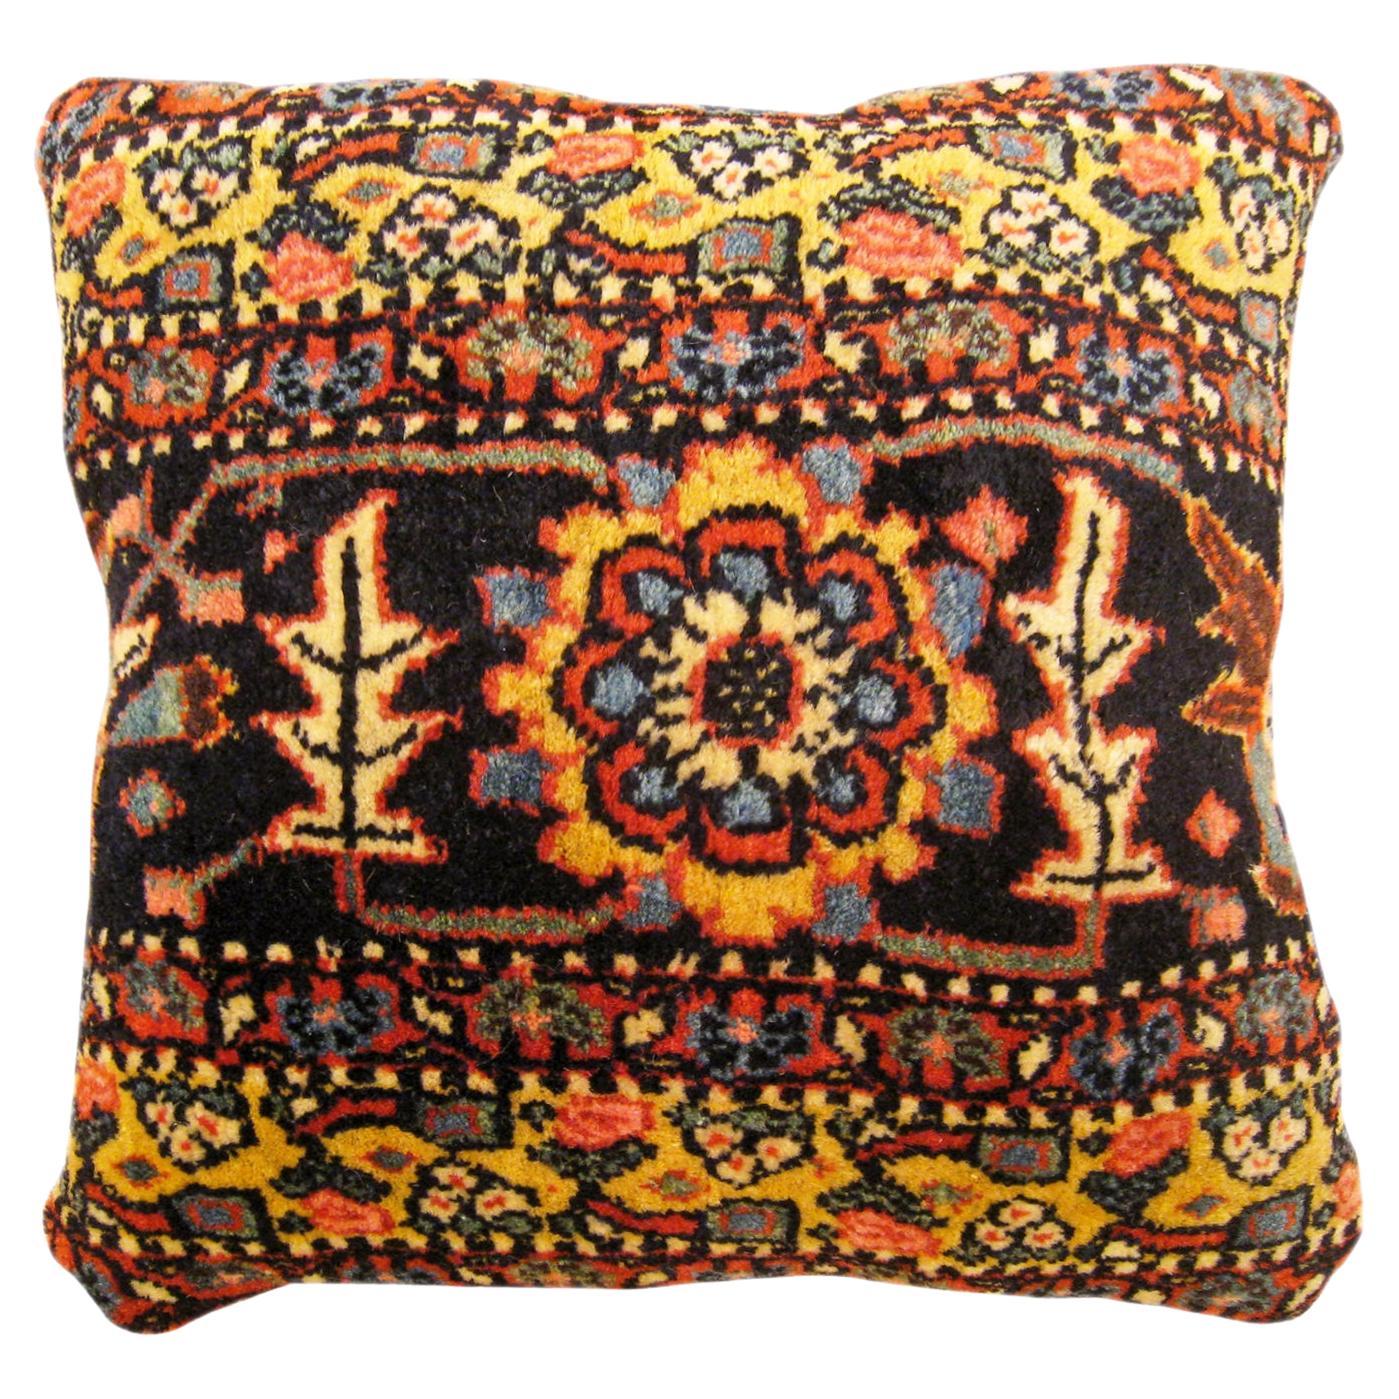 Decorative Antique Persian Bidjar Carpet Pillow with Floral Elements